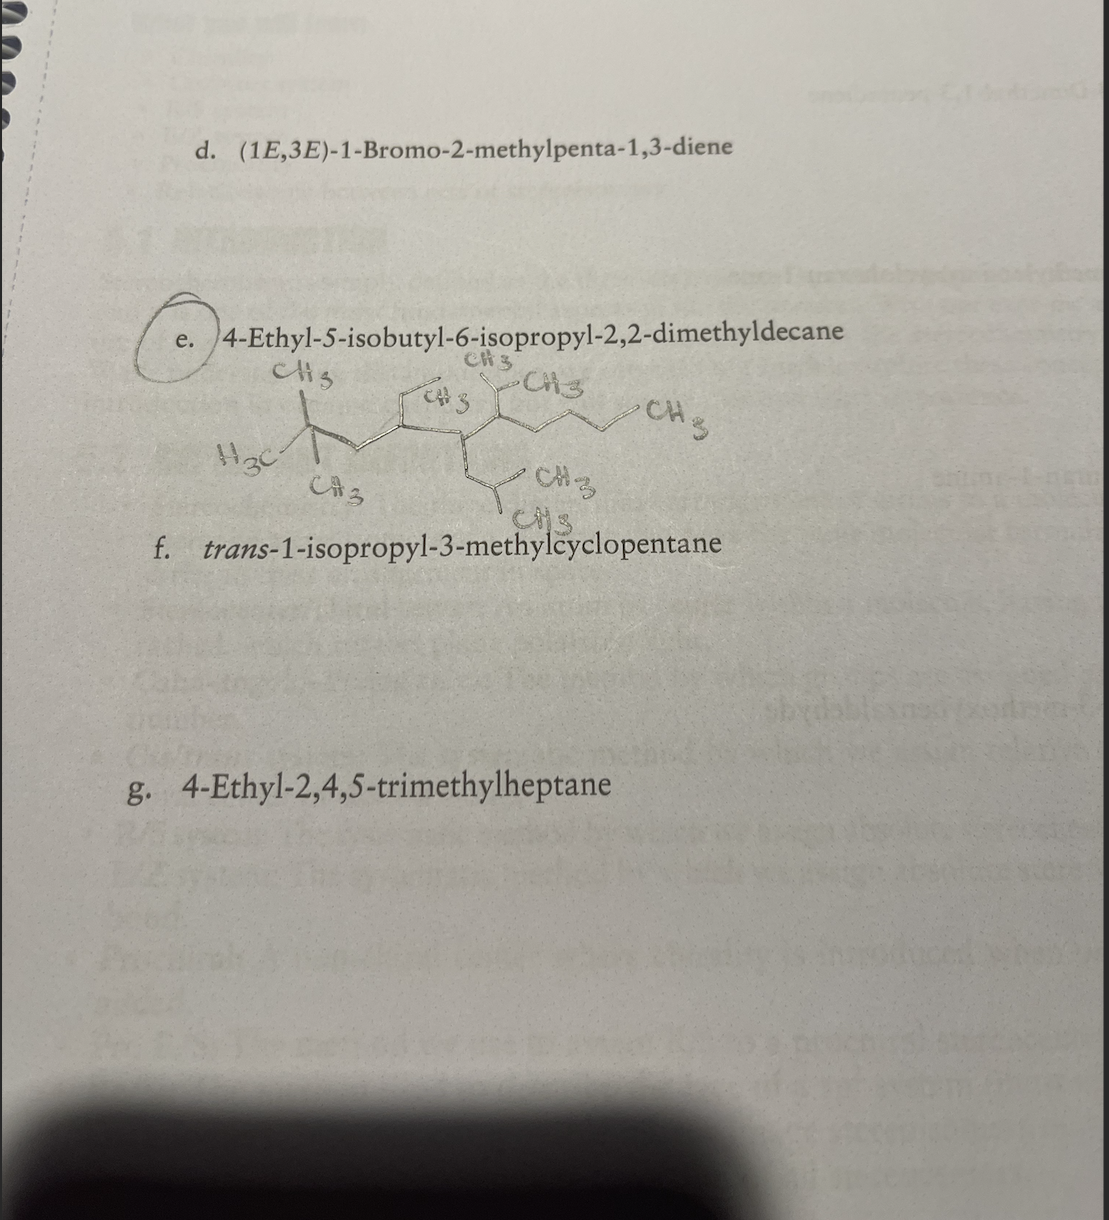 d. (1E,3E)-1-Bromo-2-methylpenta-1,3-diene
e.
4-Ethyl-5-isobutyl-6-isopropyl-2,2-dimethyldecane
CHS
-CR3
clis
H3C
CA3
CH3
CMS
CHS
f. trans-1-isopropyl-3-methylcyclopentane
g. 4-Ethyl-2,4,5-trimethylheptane